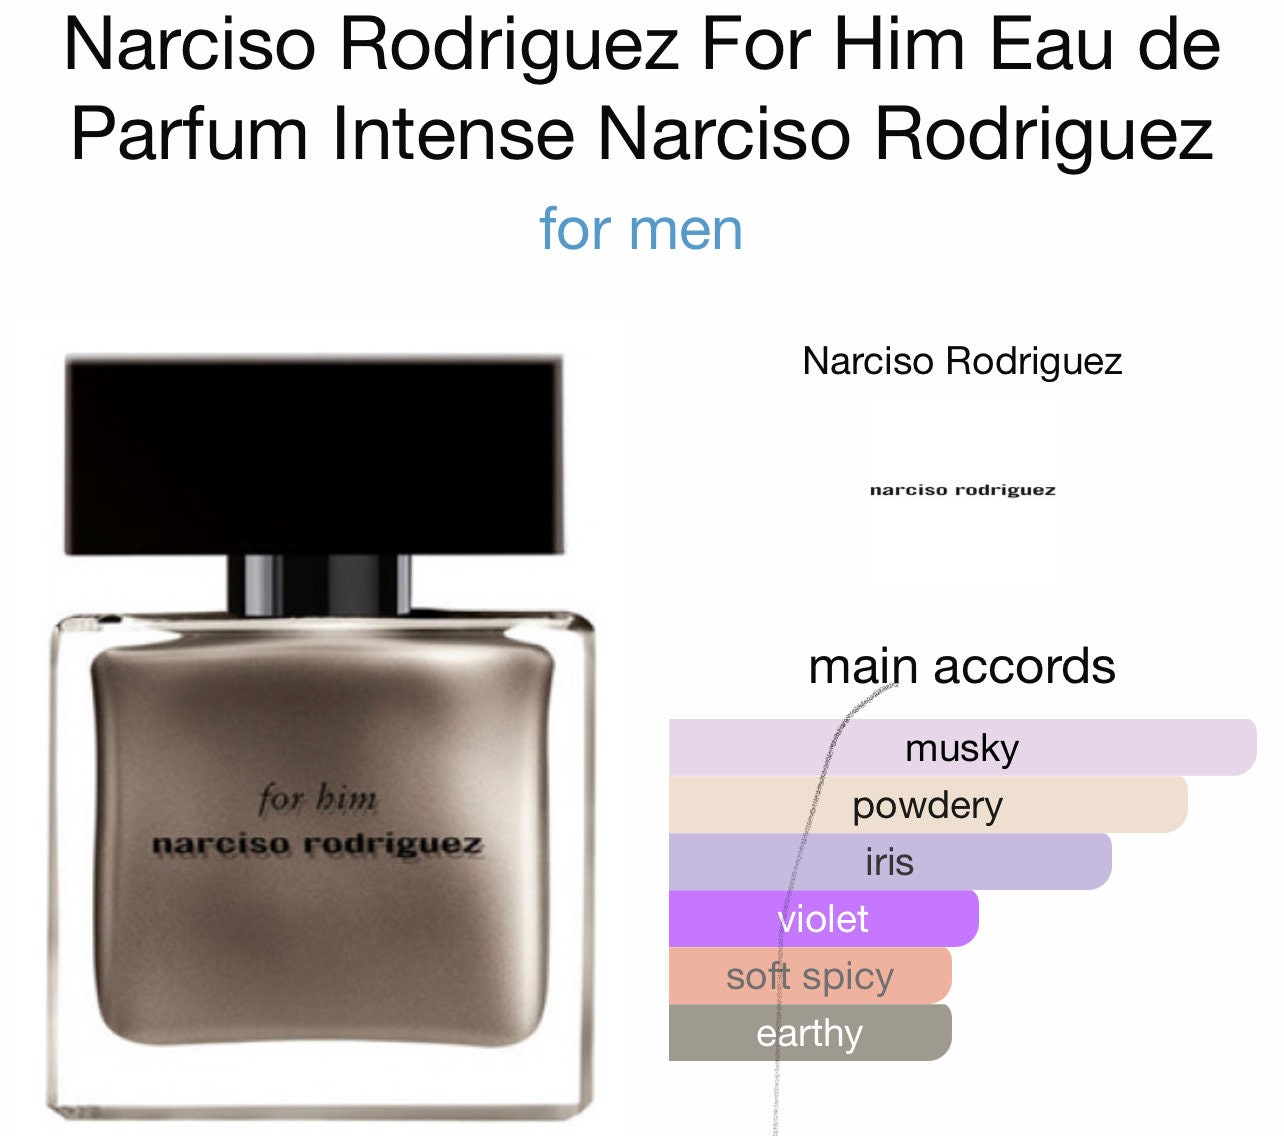 Narciso Rodriguez For Him Eau de Parfum Intense Narciso Rodriguez